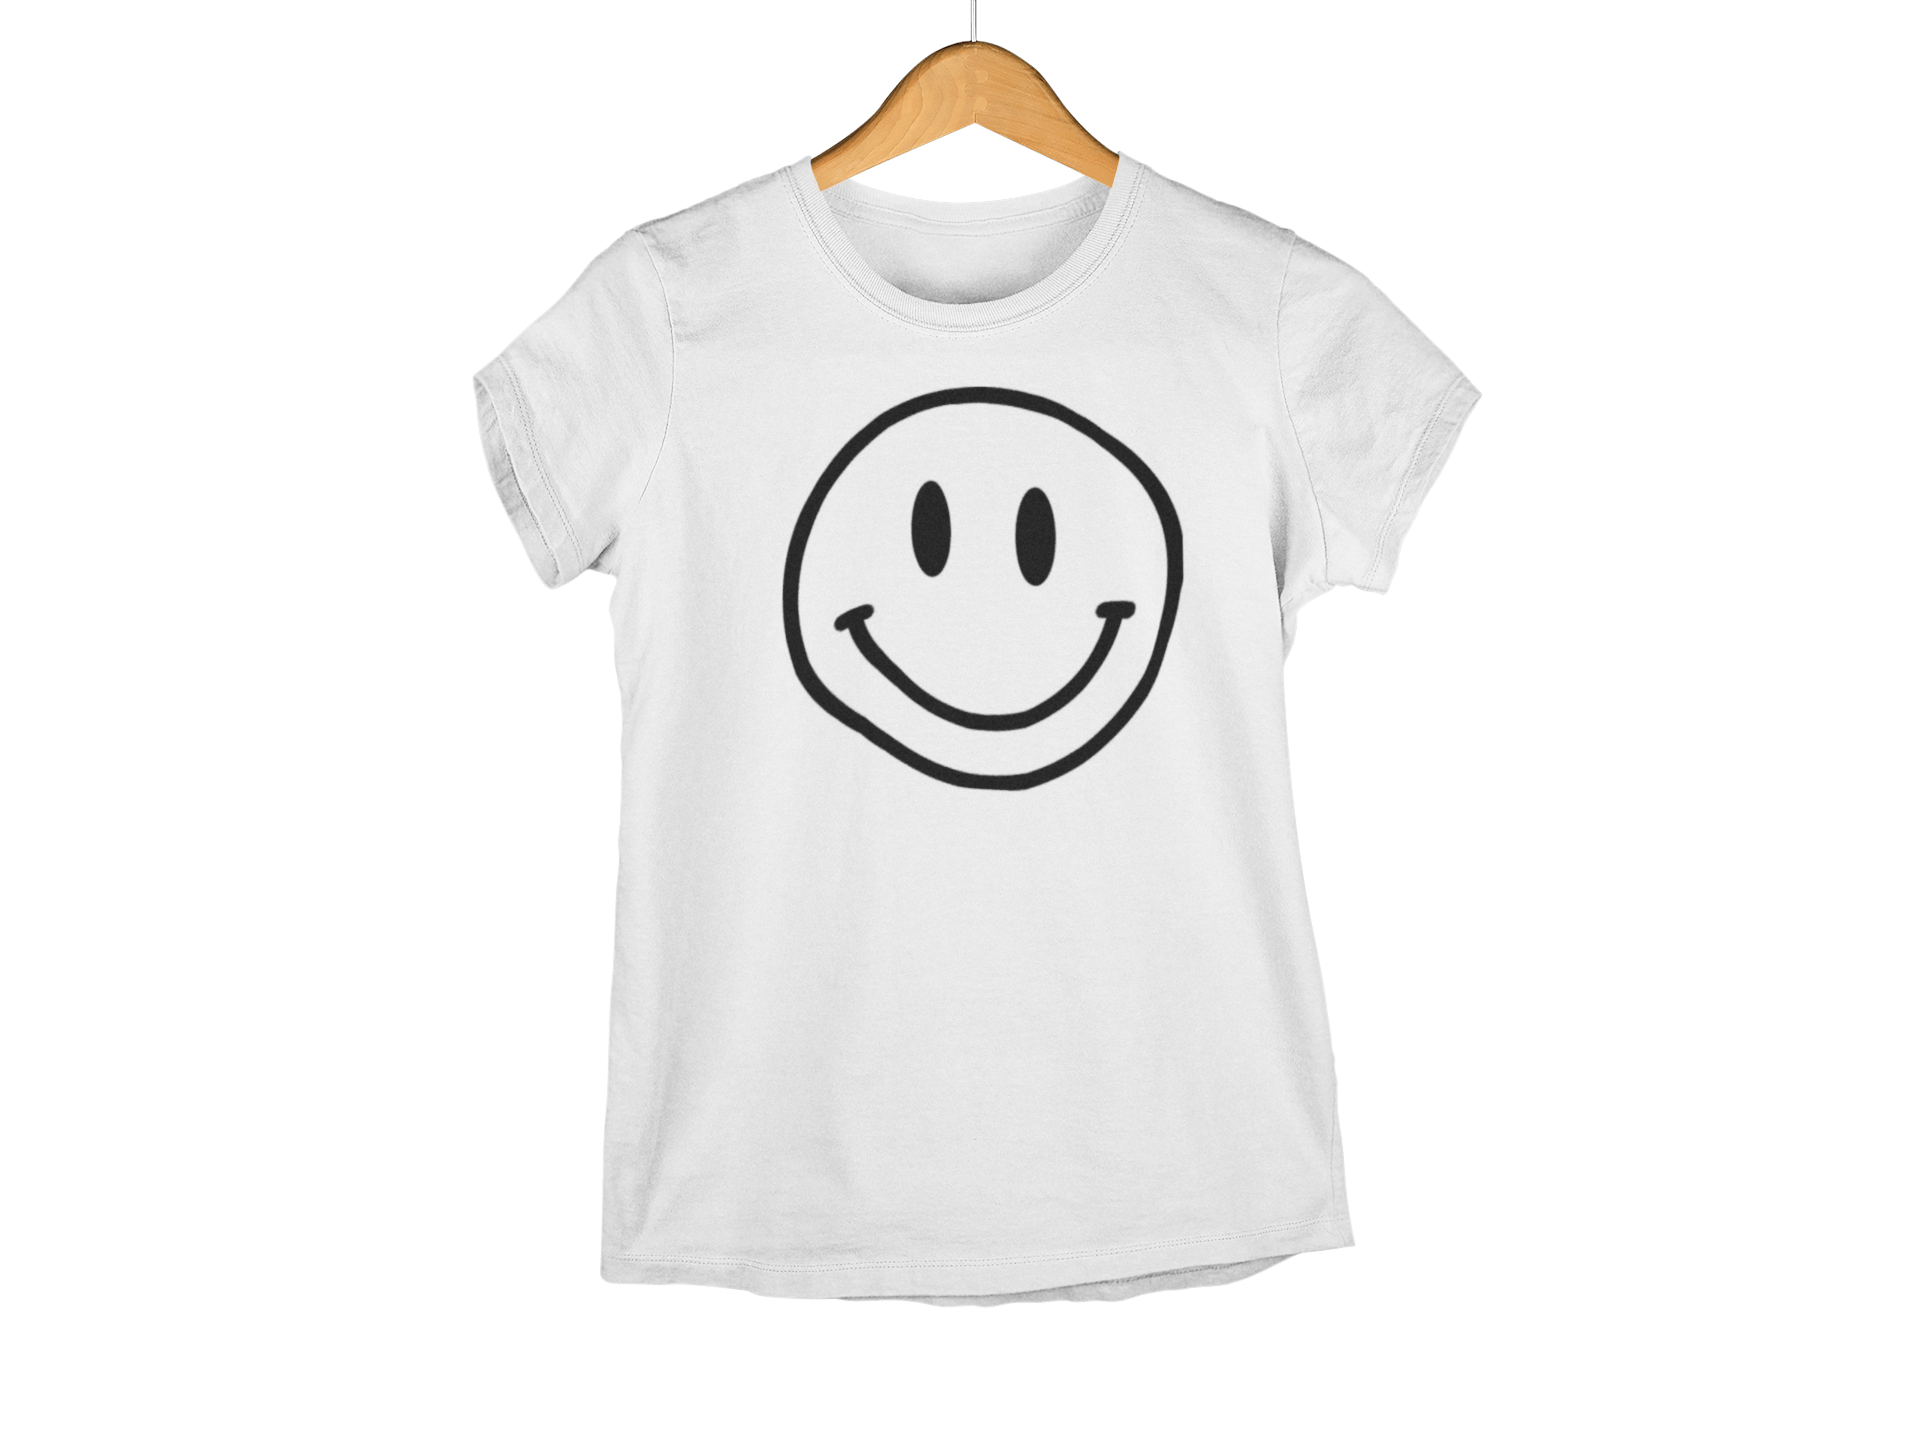 Buy Smiley Face White T Shirt For Men And Women